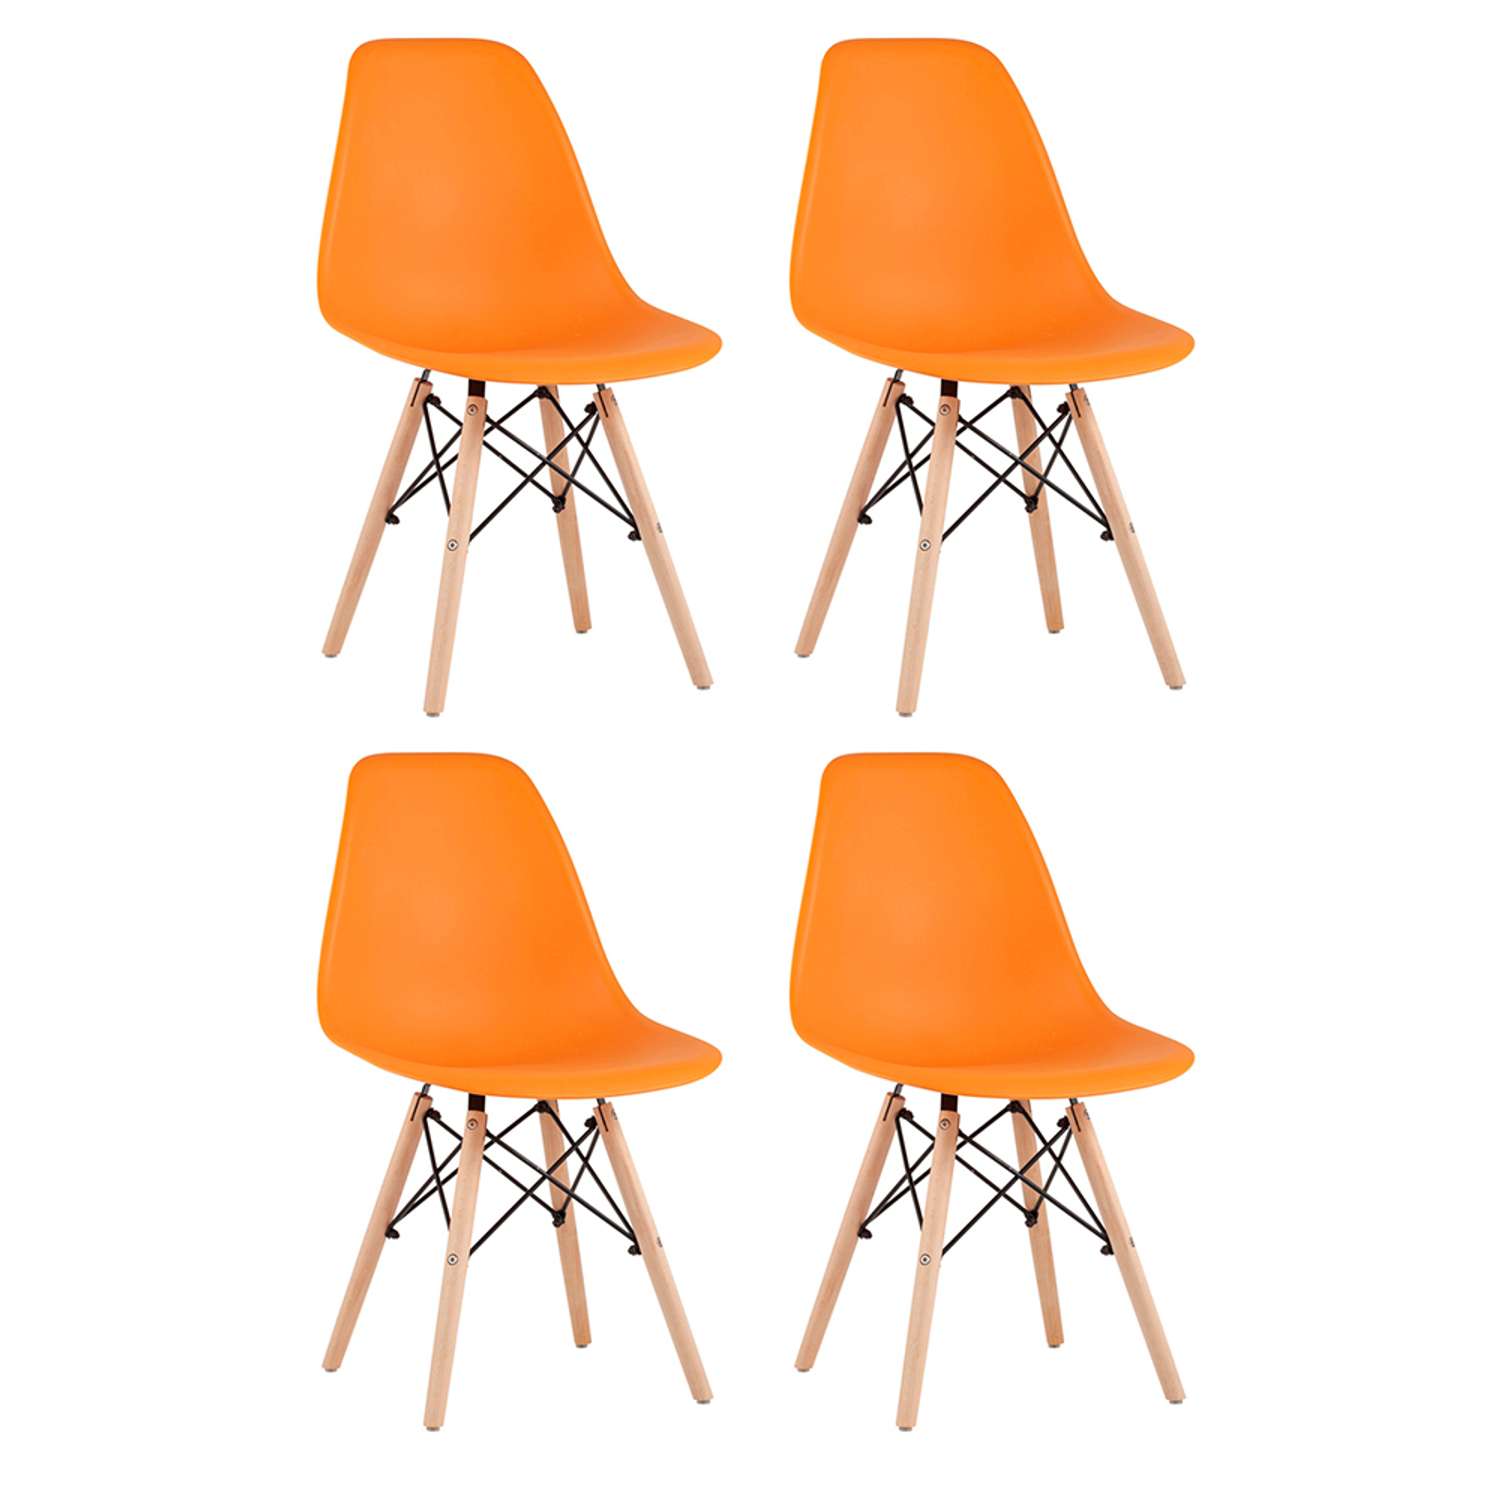 Комплект стульев Stool Group DSW Style оранжевый - фото 2